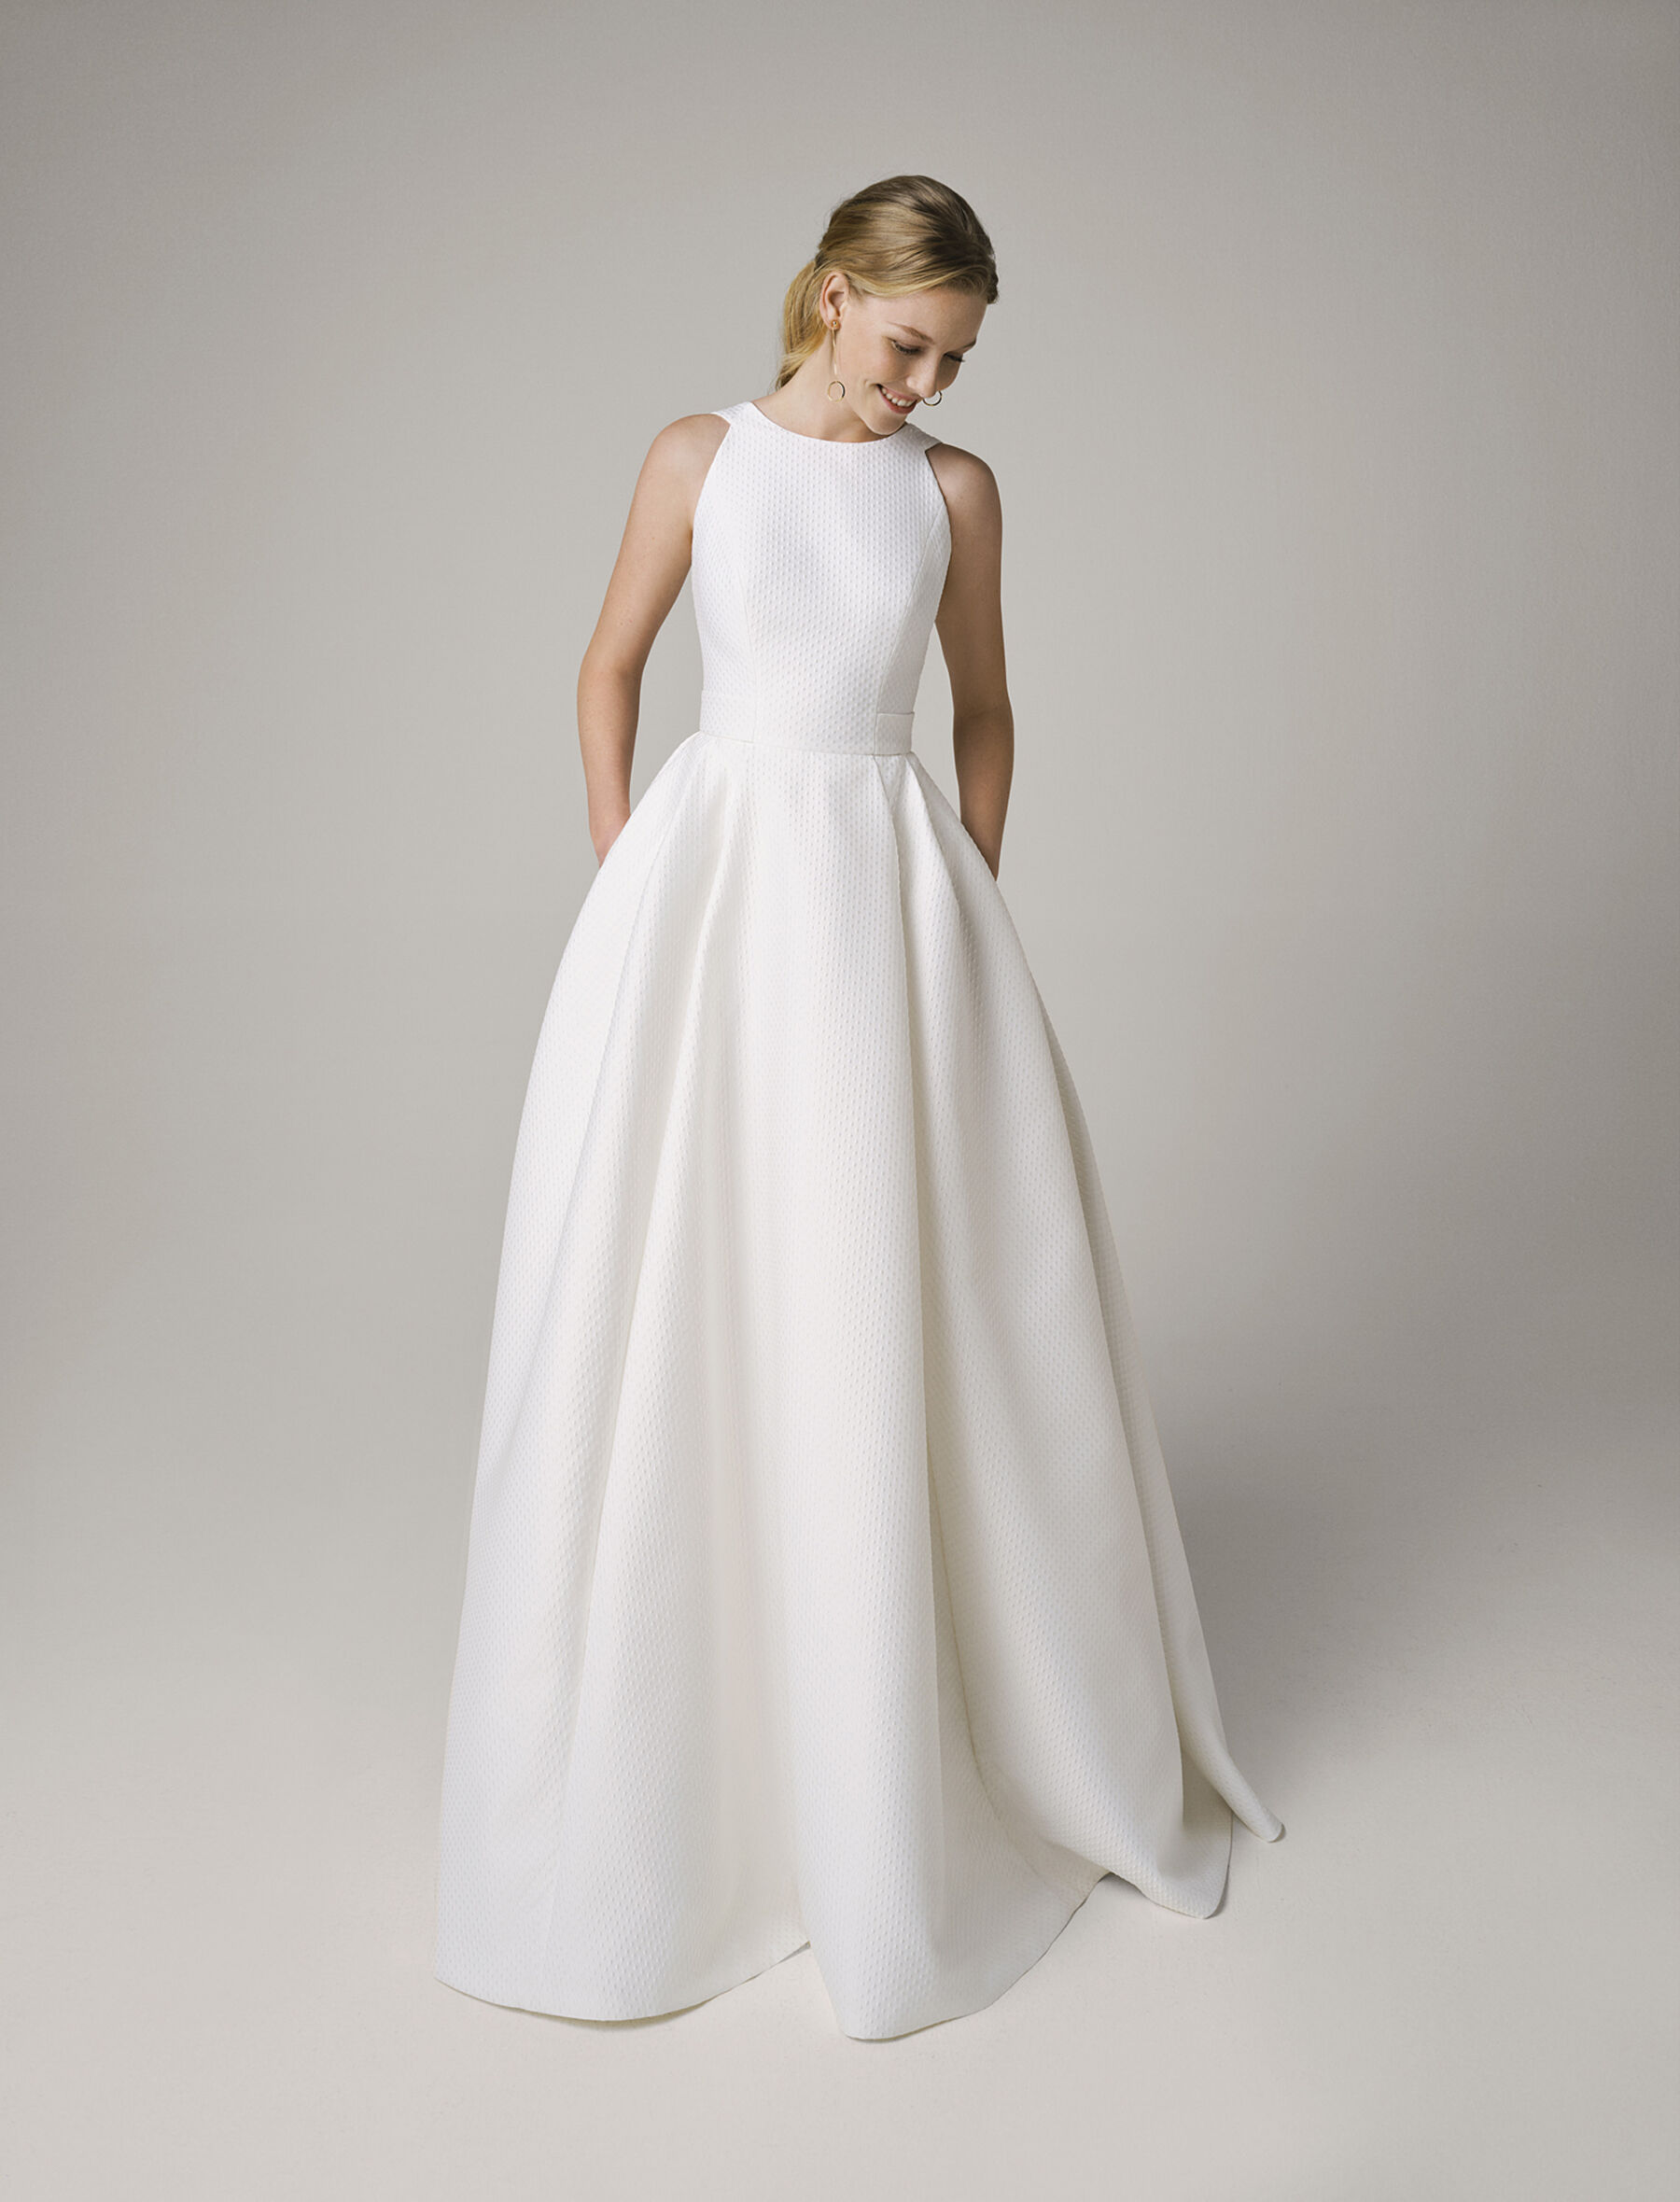 Jesus Peiro wedding dress. Available at the Miss Bush pop up sample sale, April 2023.